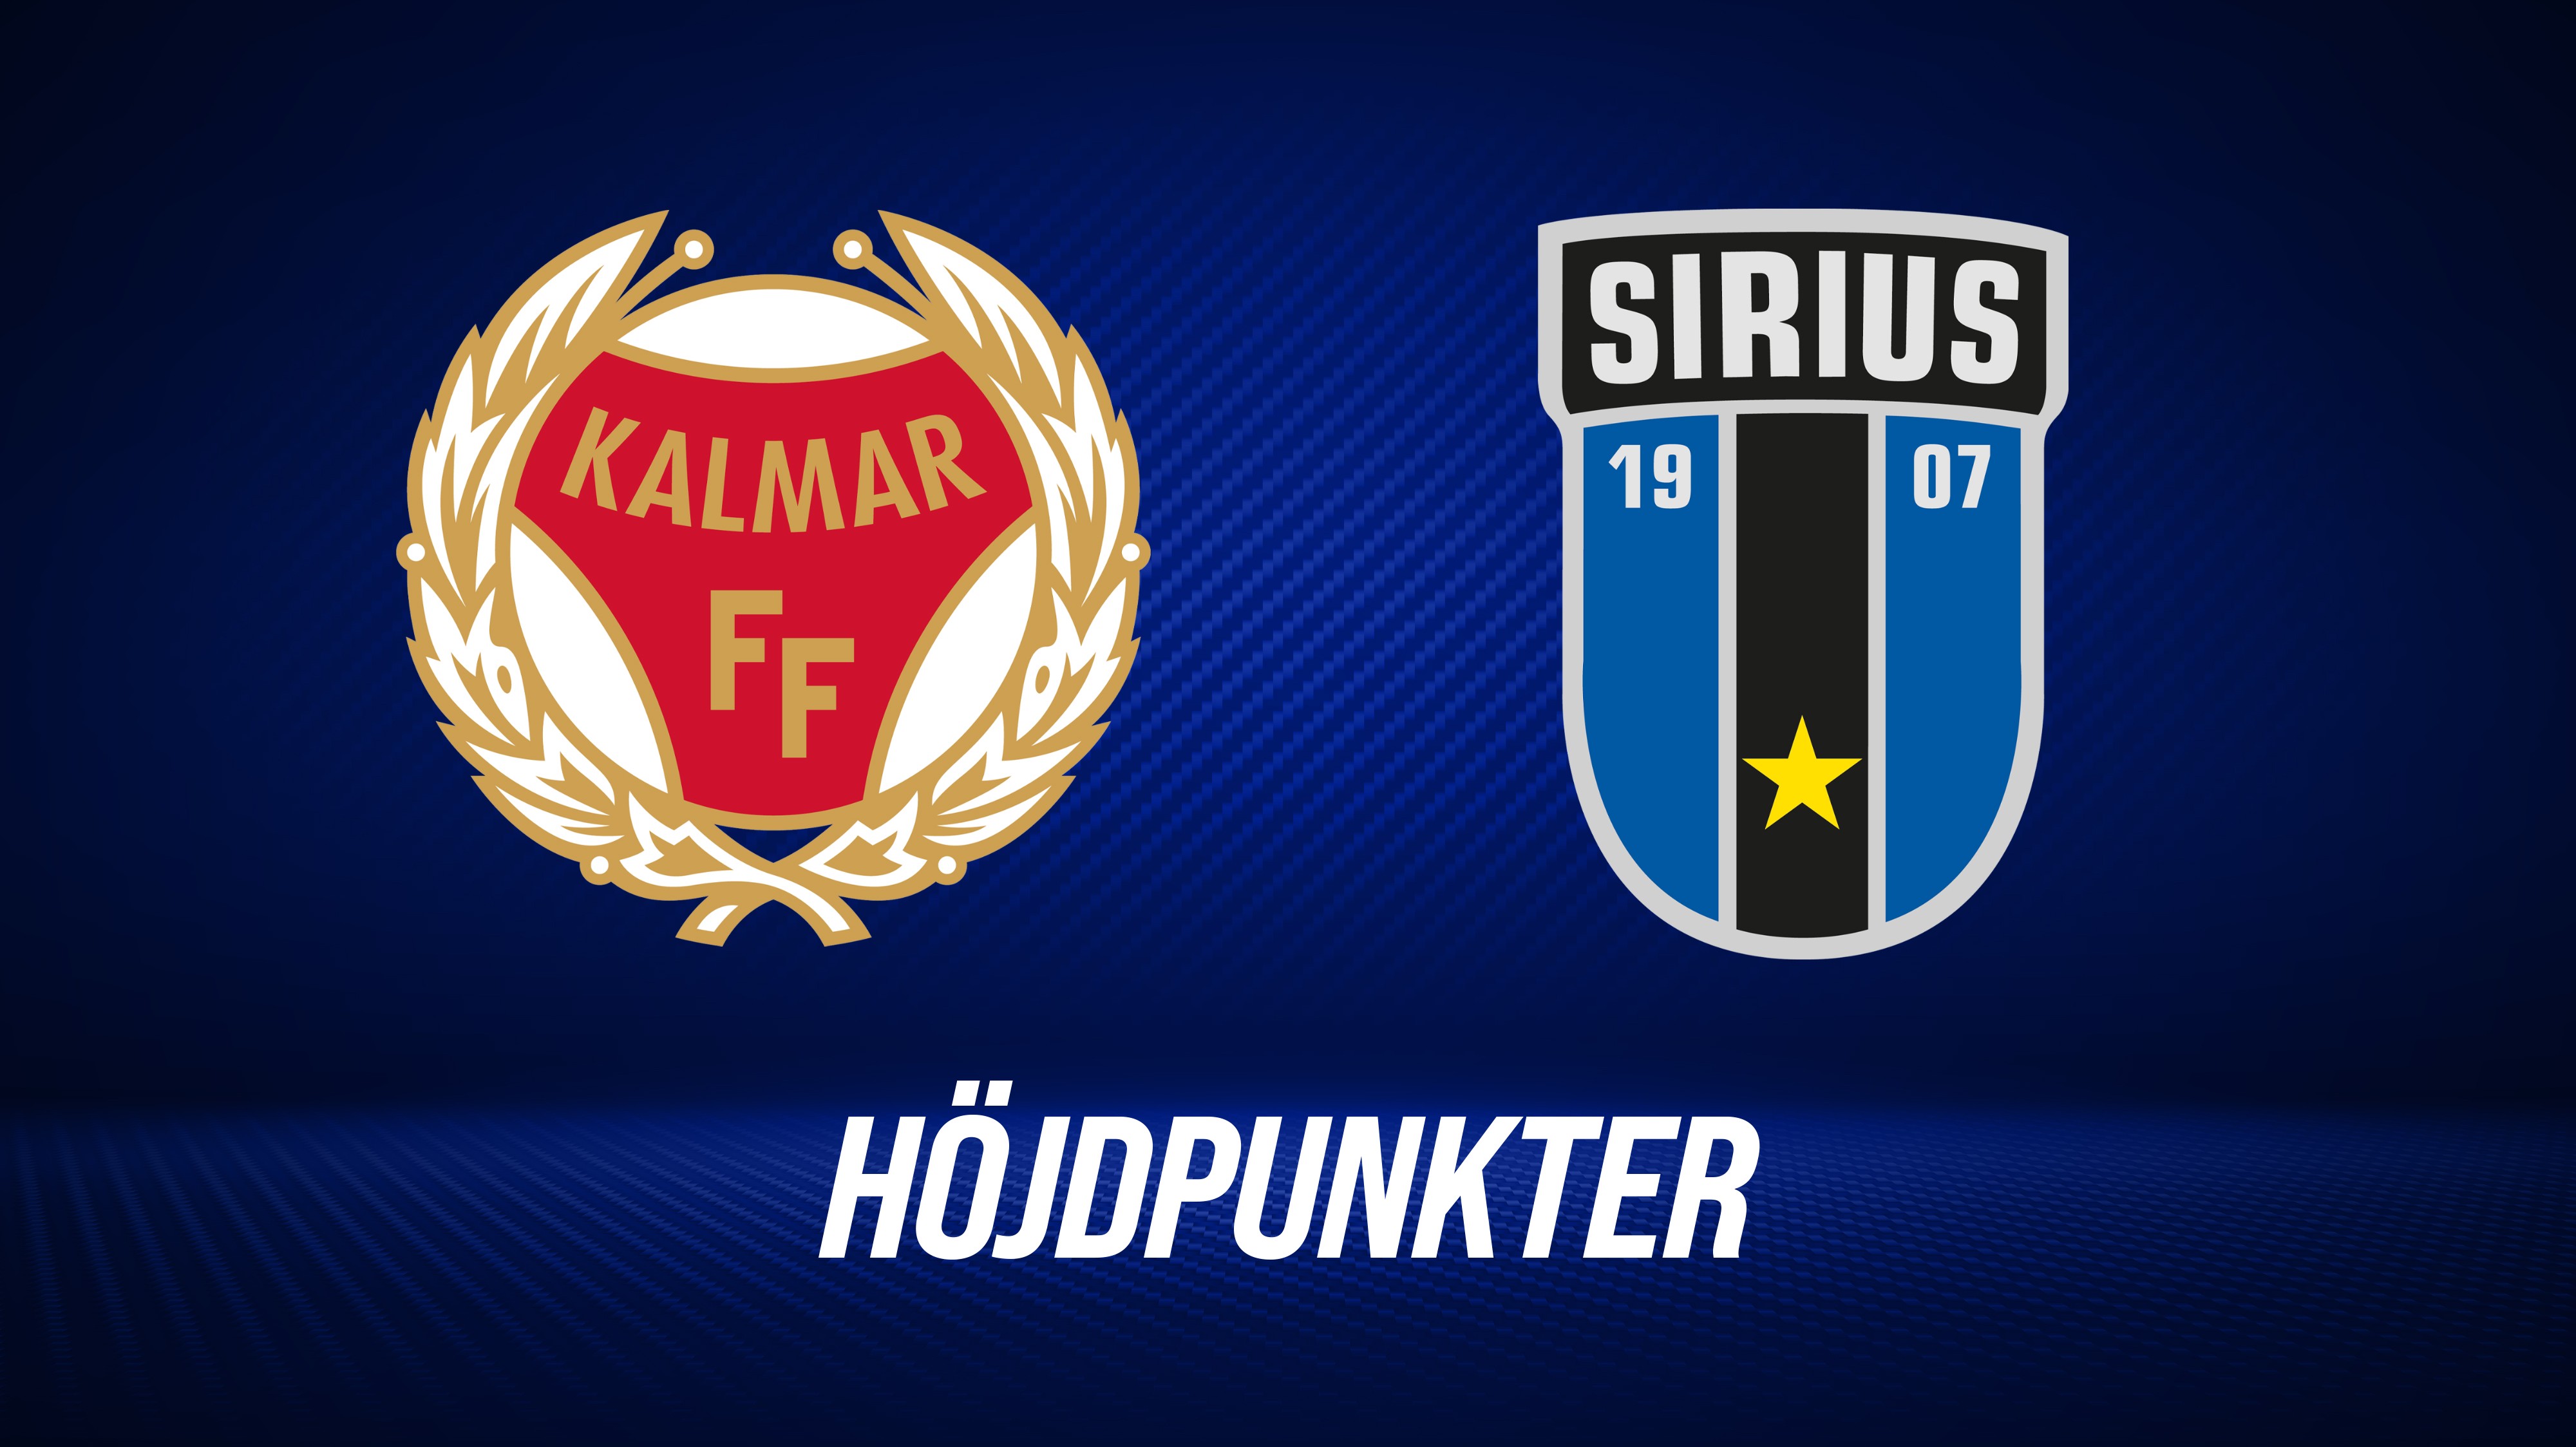 Höjdpunkter: Kalmar FF - IK Sirius